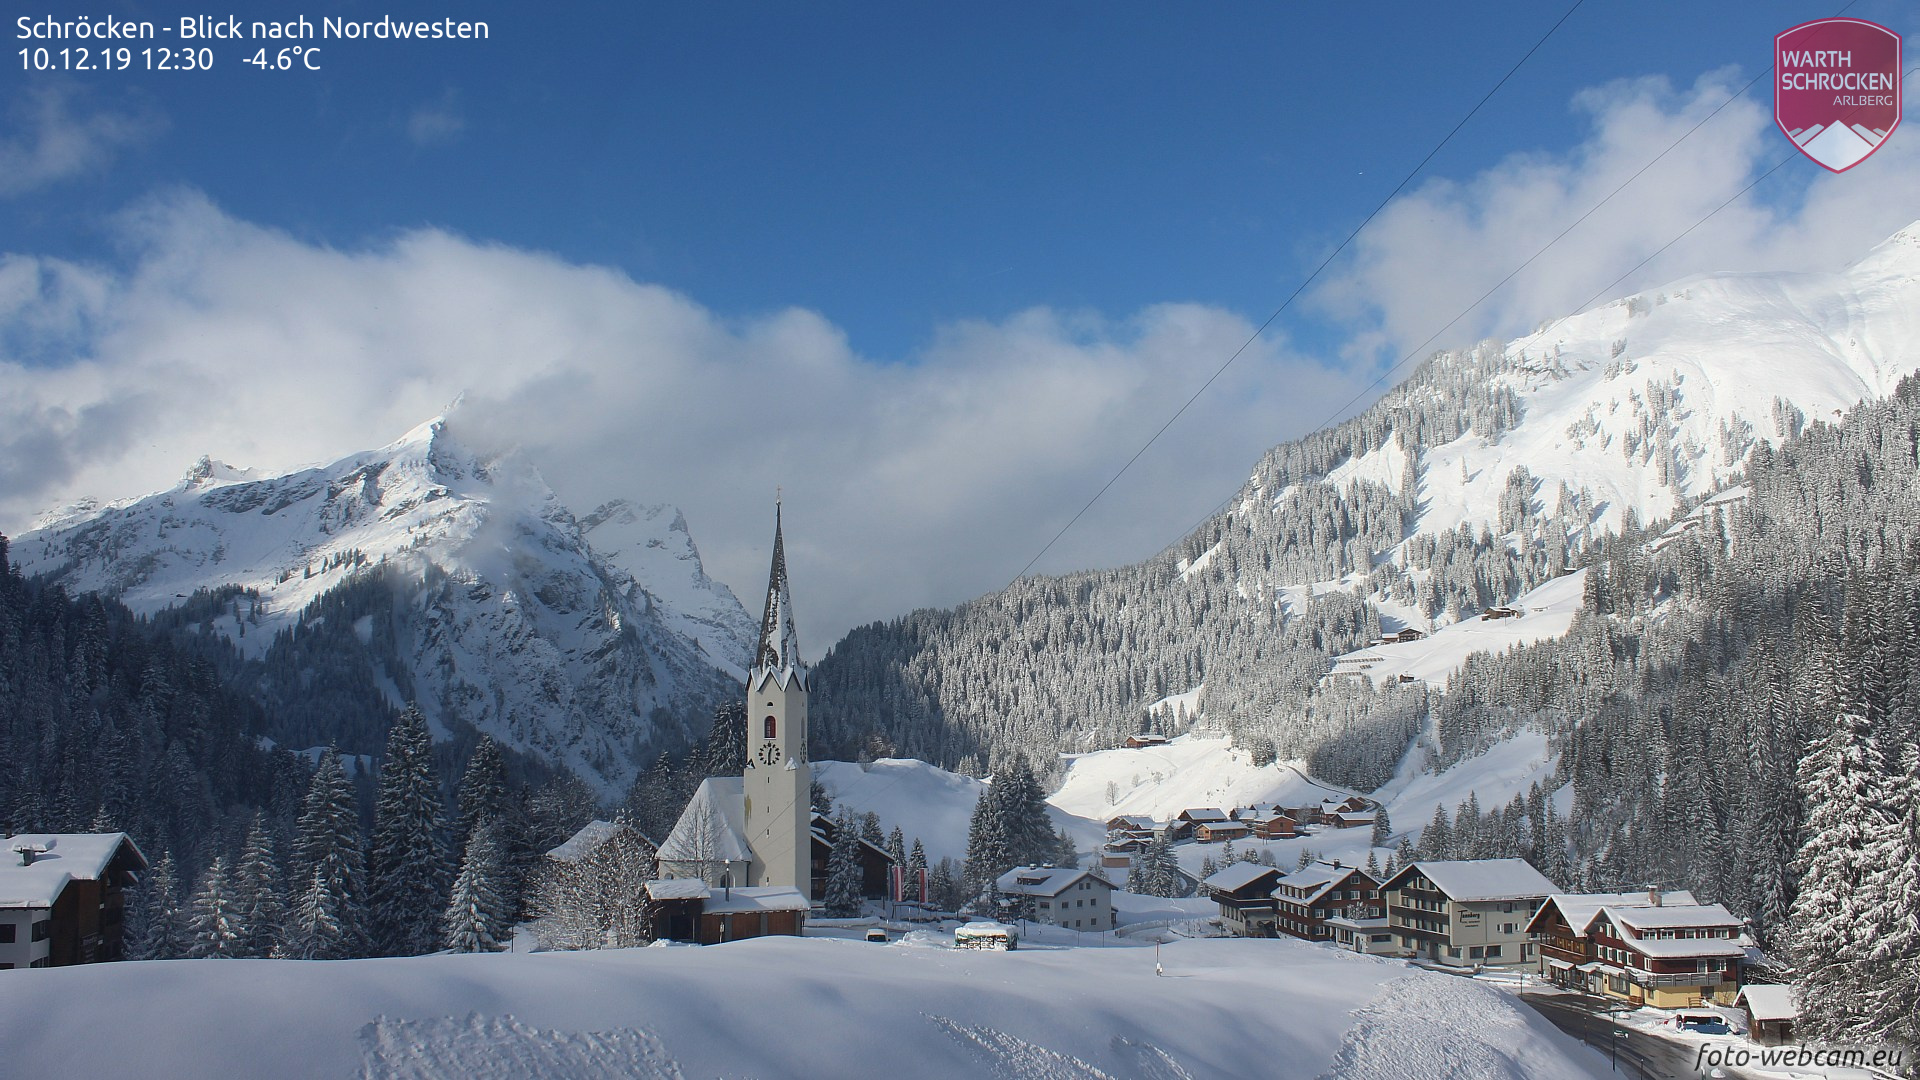 Vorarlberg havazás után